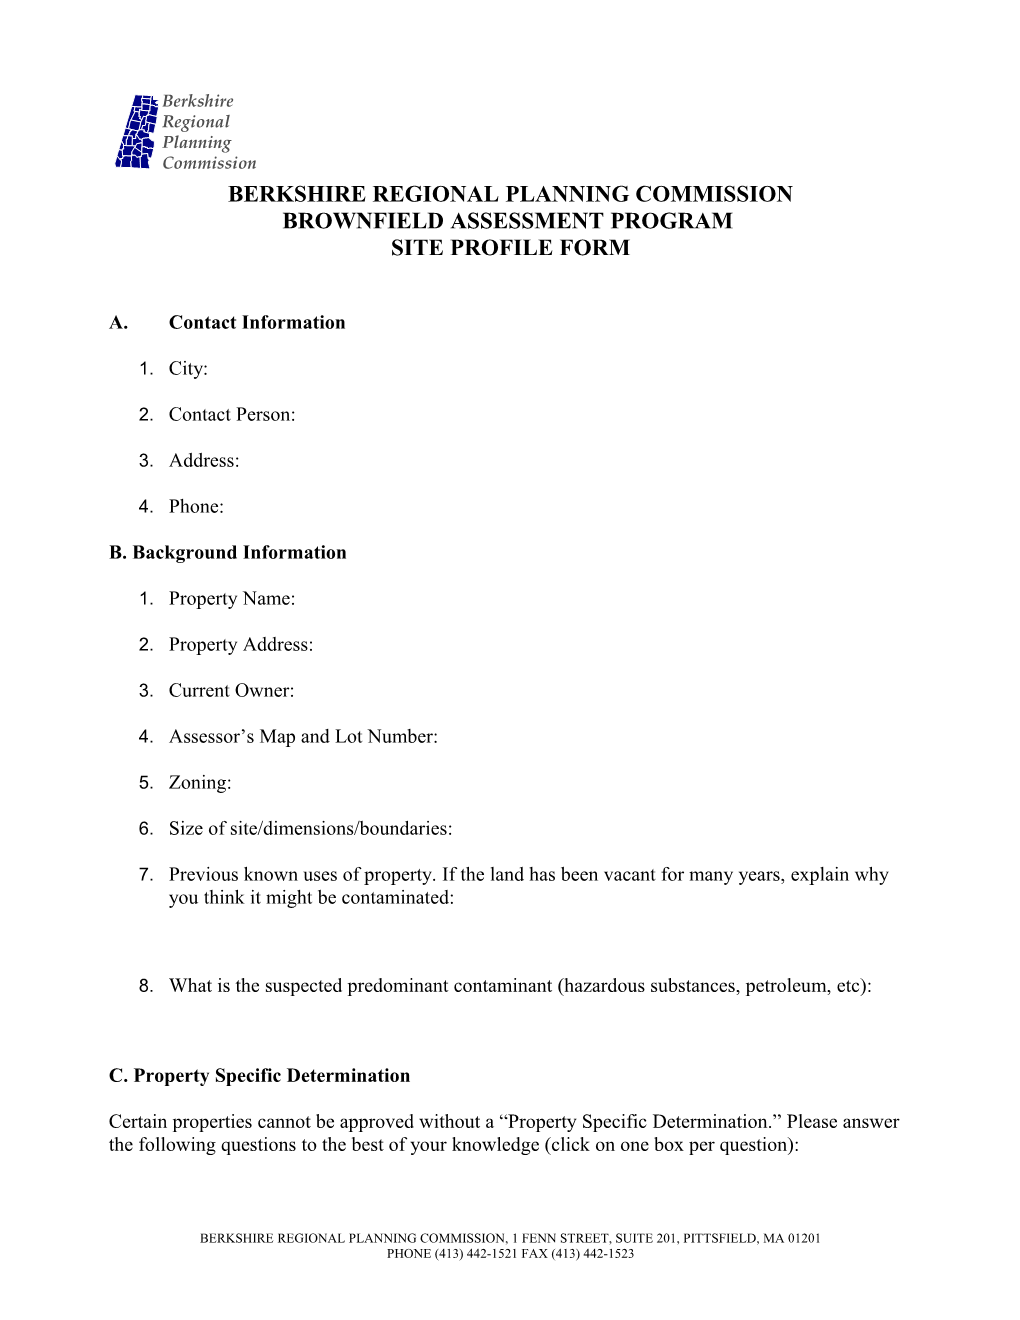 Berkshire Regional Planning Commission